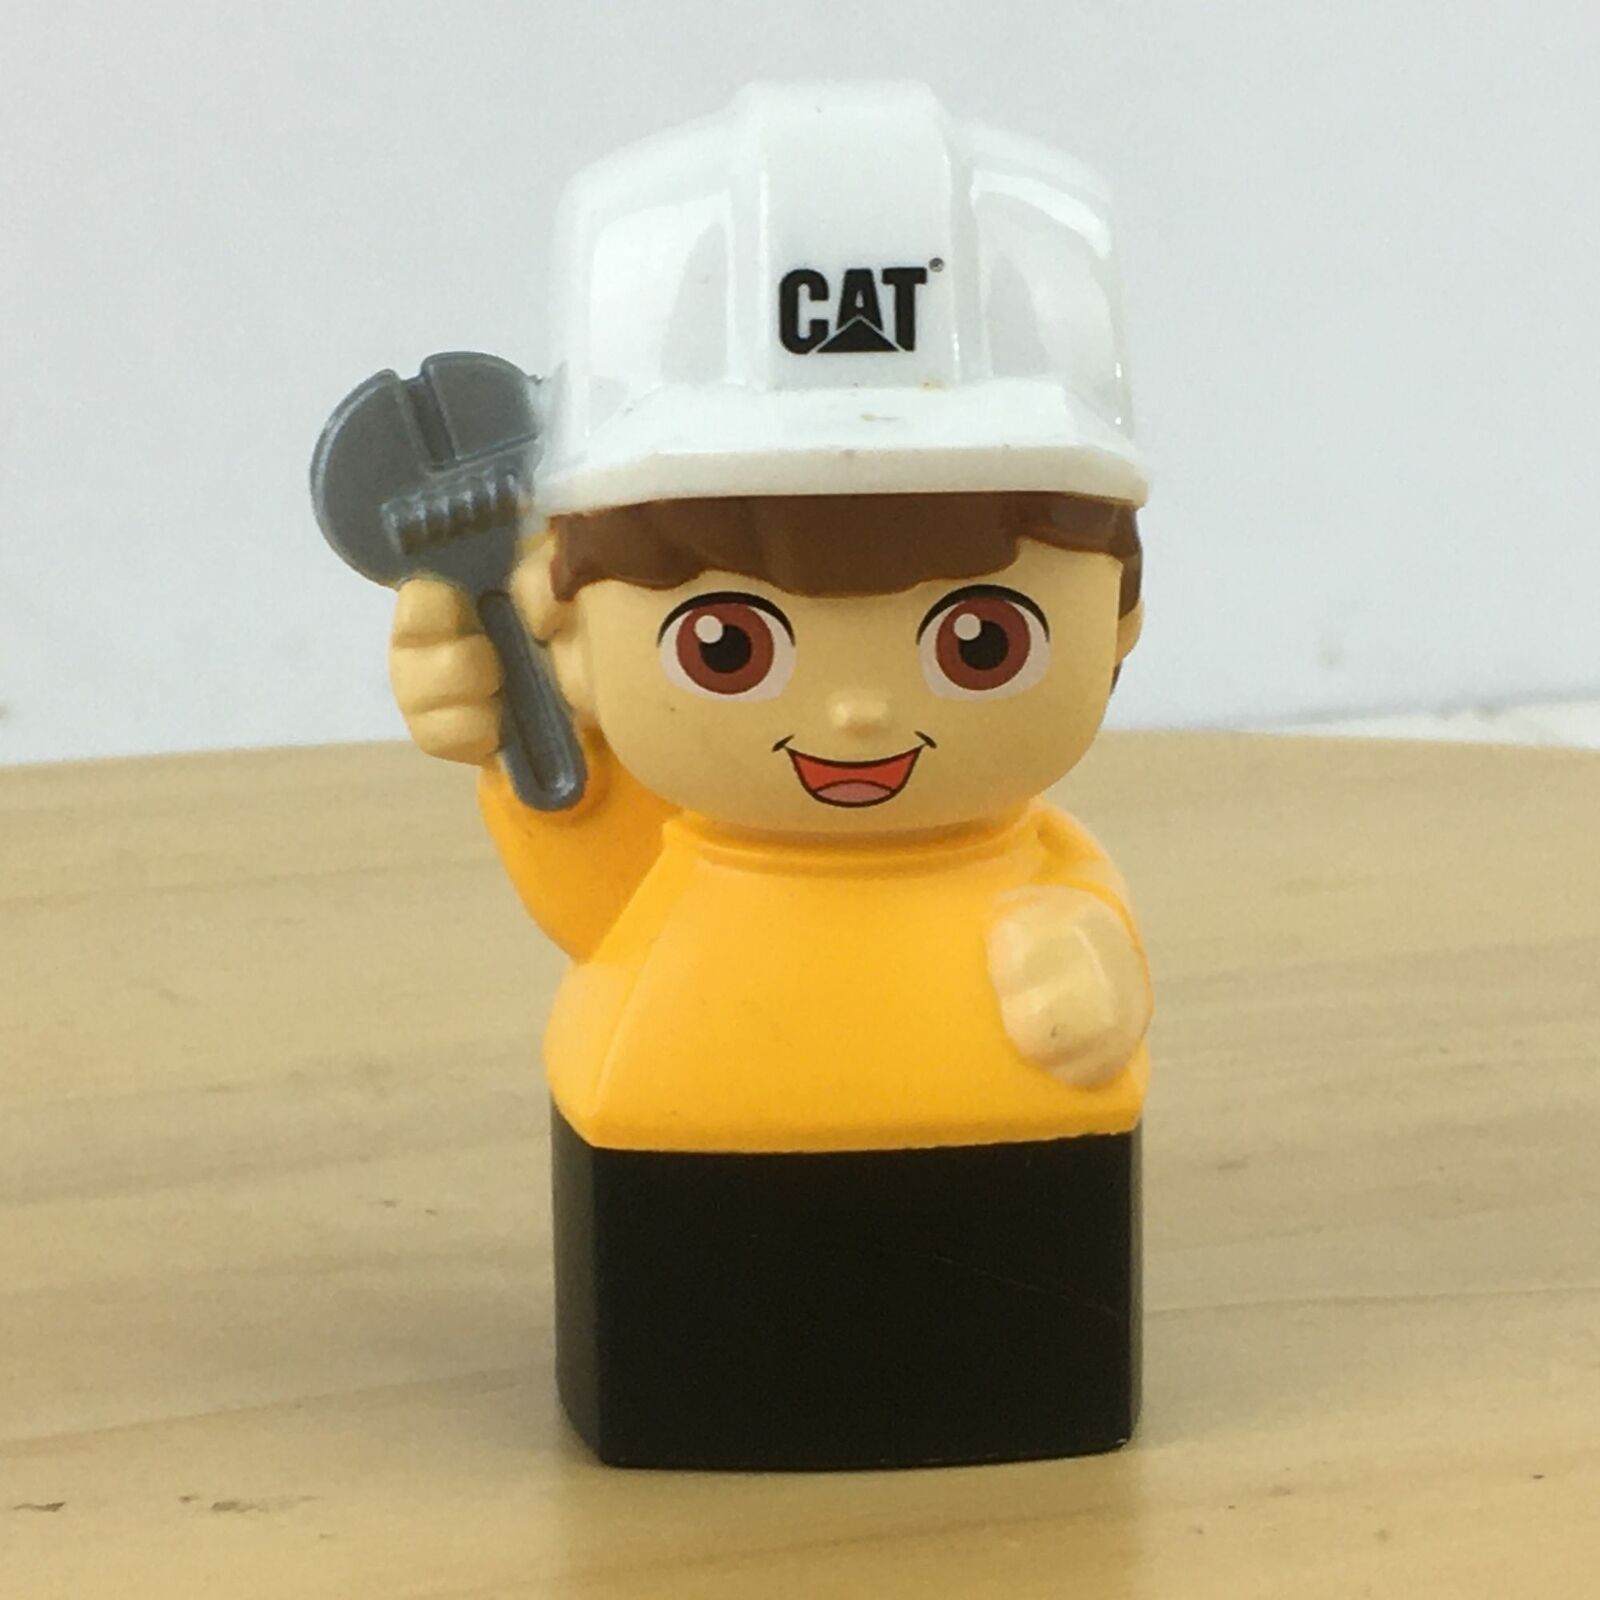 Mega Bloks Replacement Cat Mechanic Man Figure Caterpillar Toy Figurine